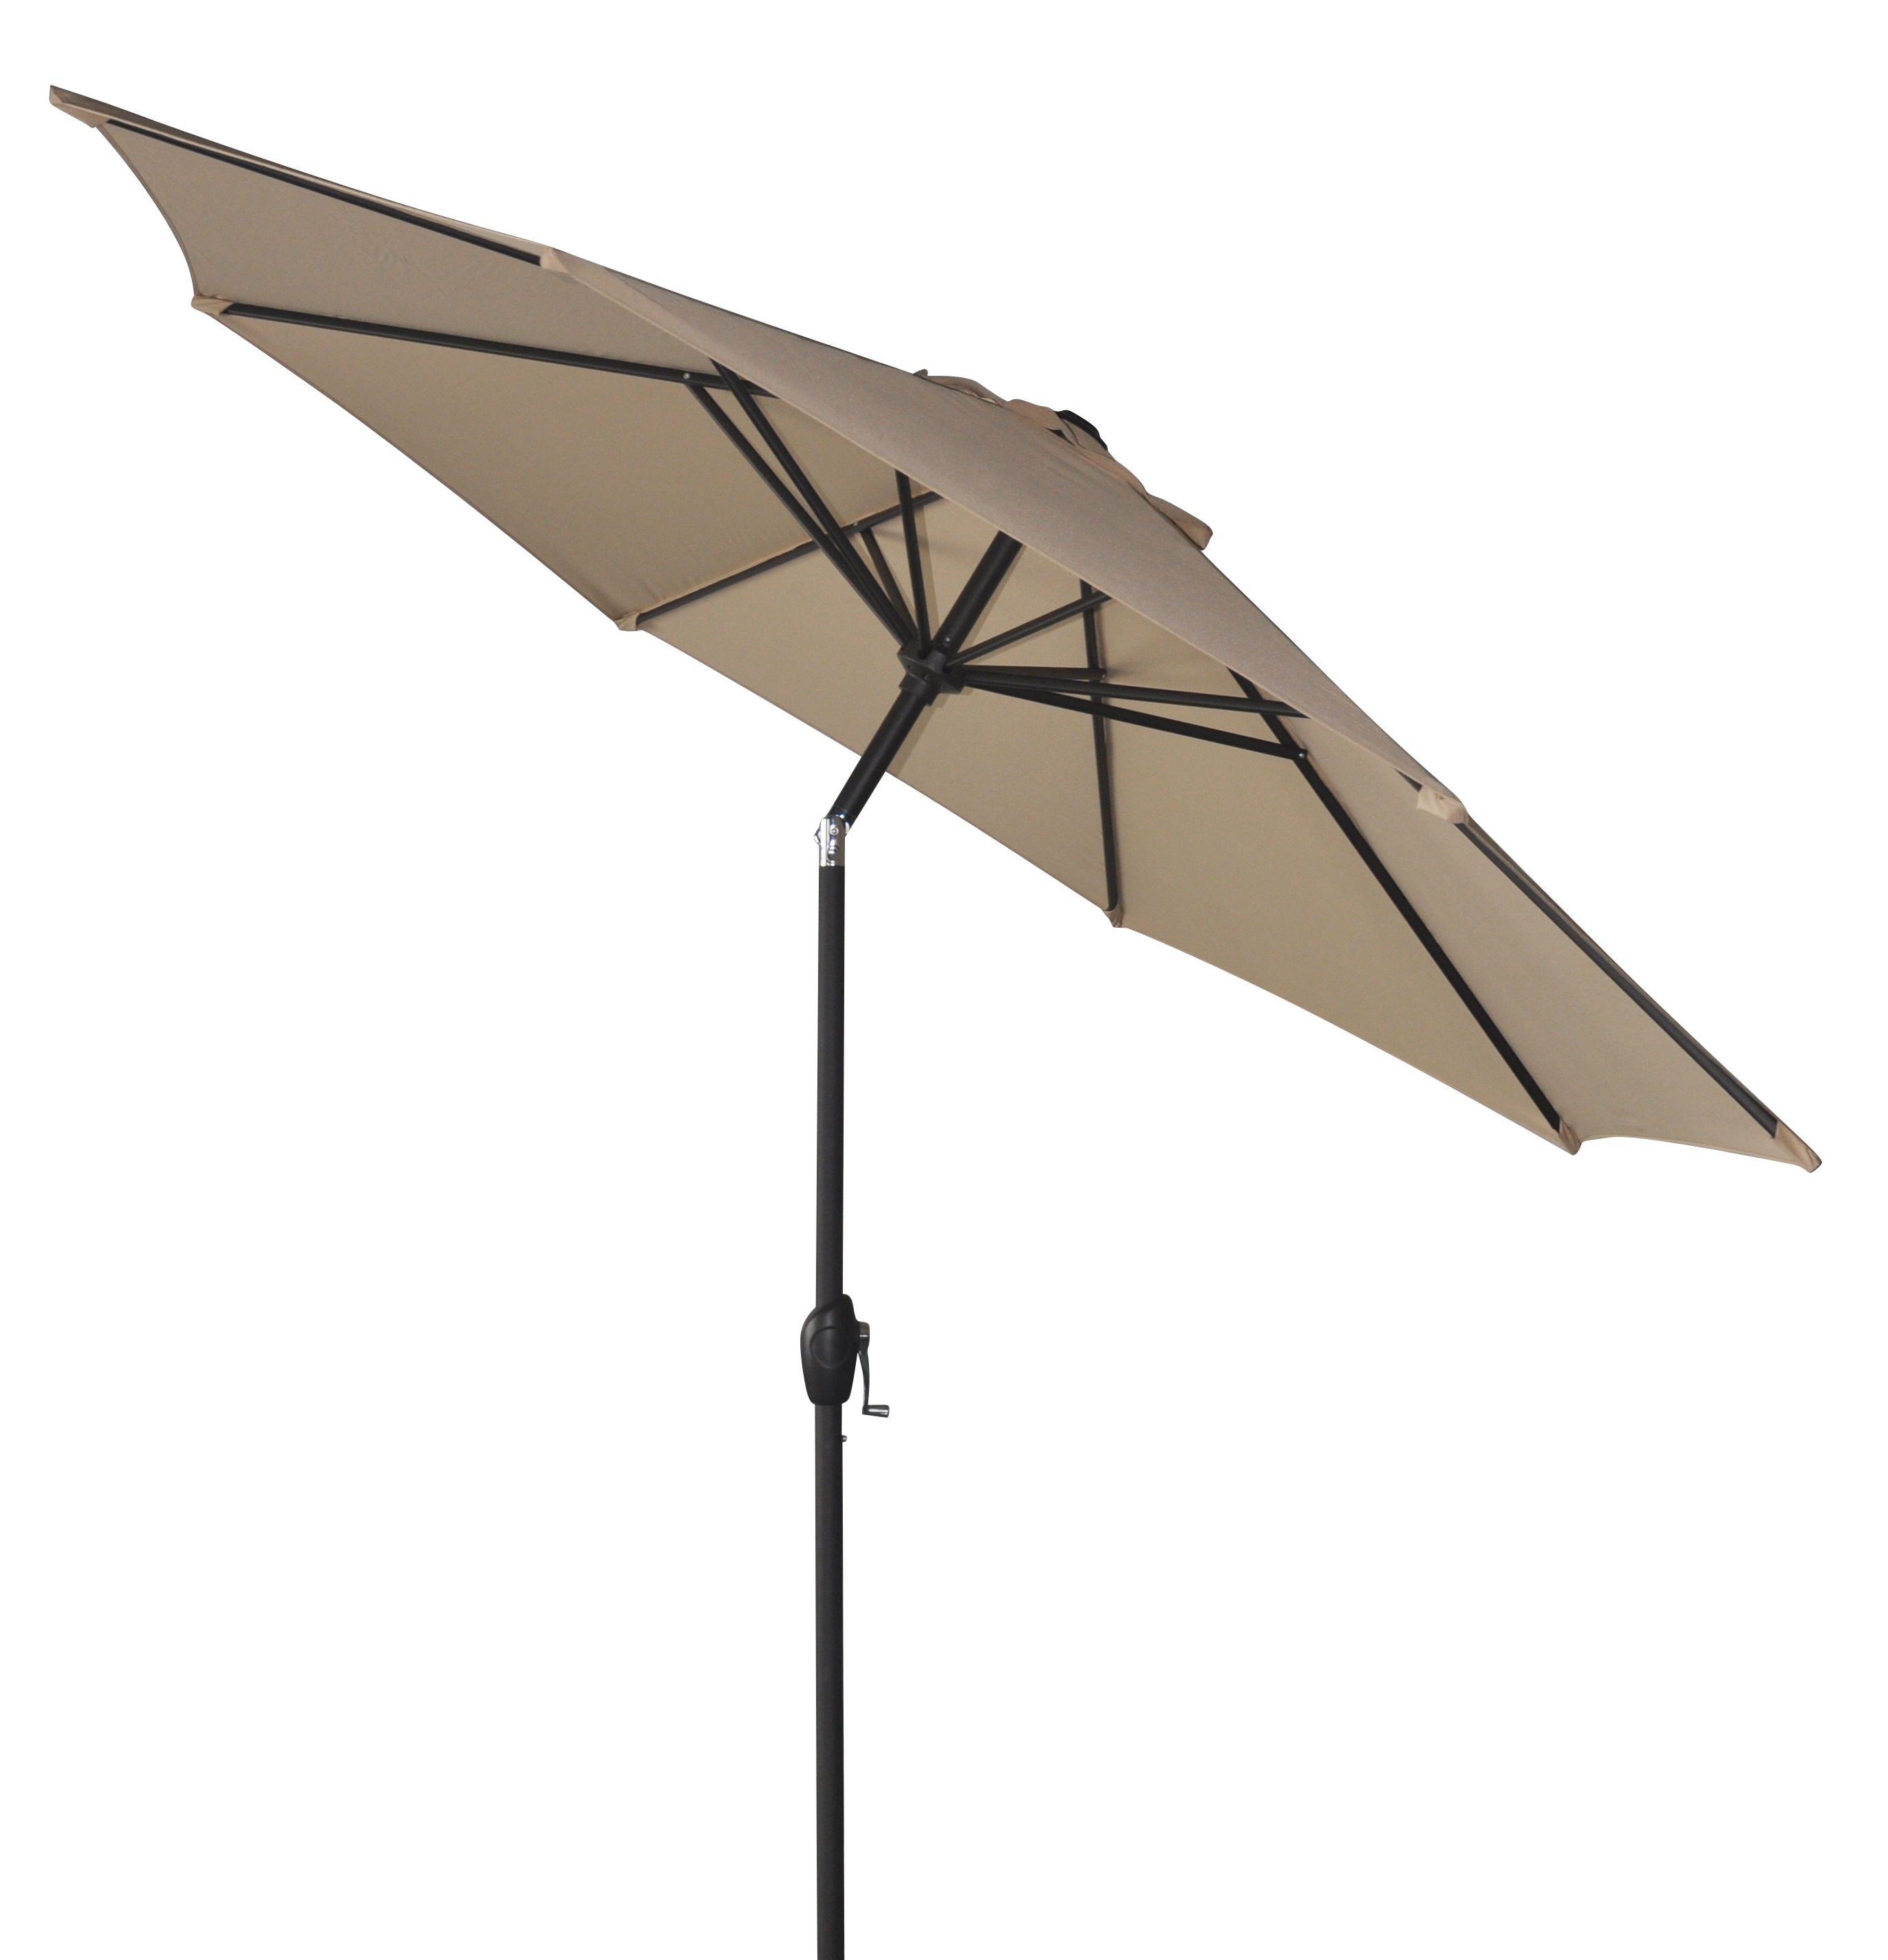 Mainstays 9' Outdoor Tilt Market Patio Umbrella - Tan - image 3 of 10